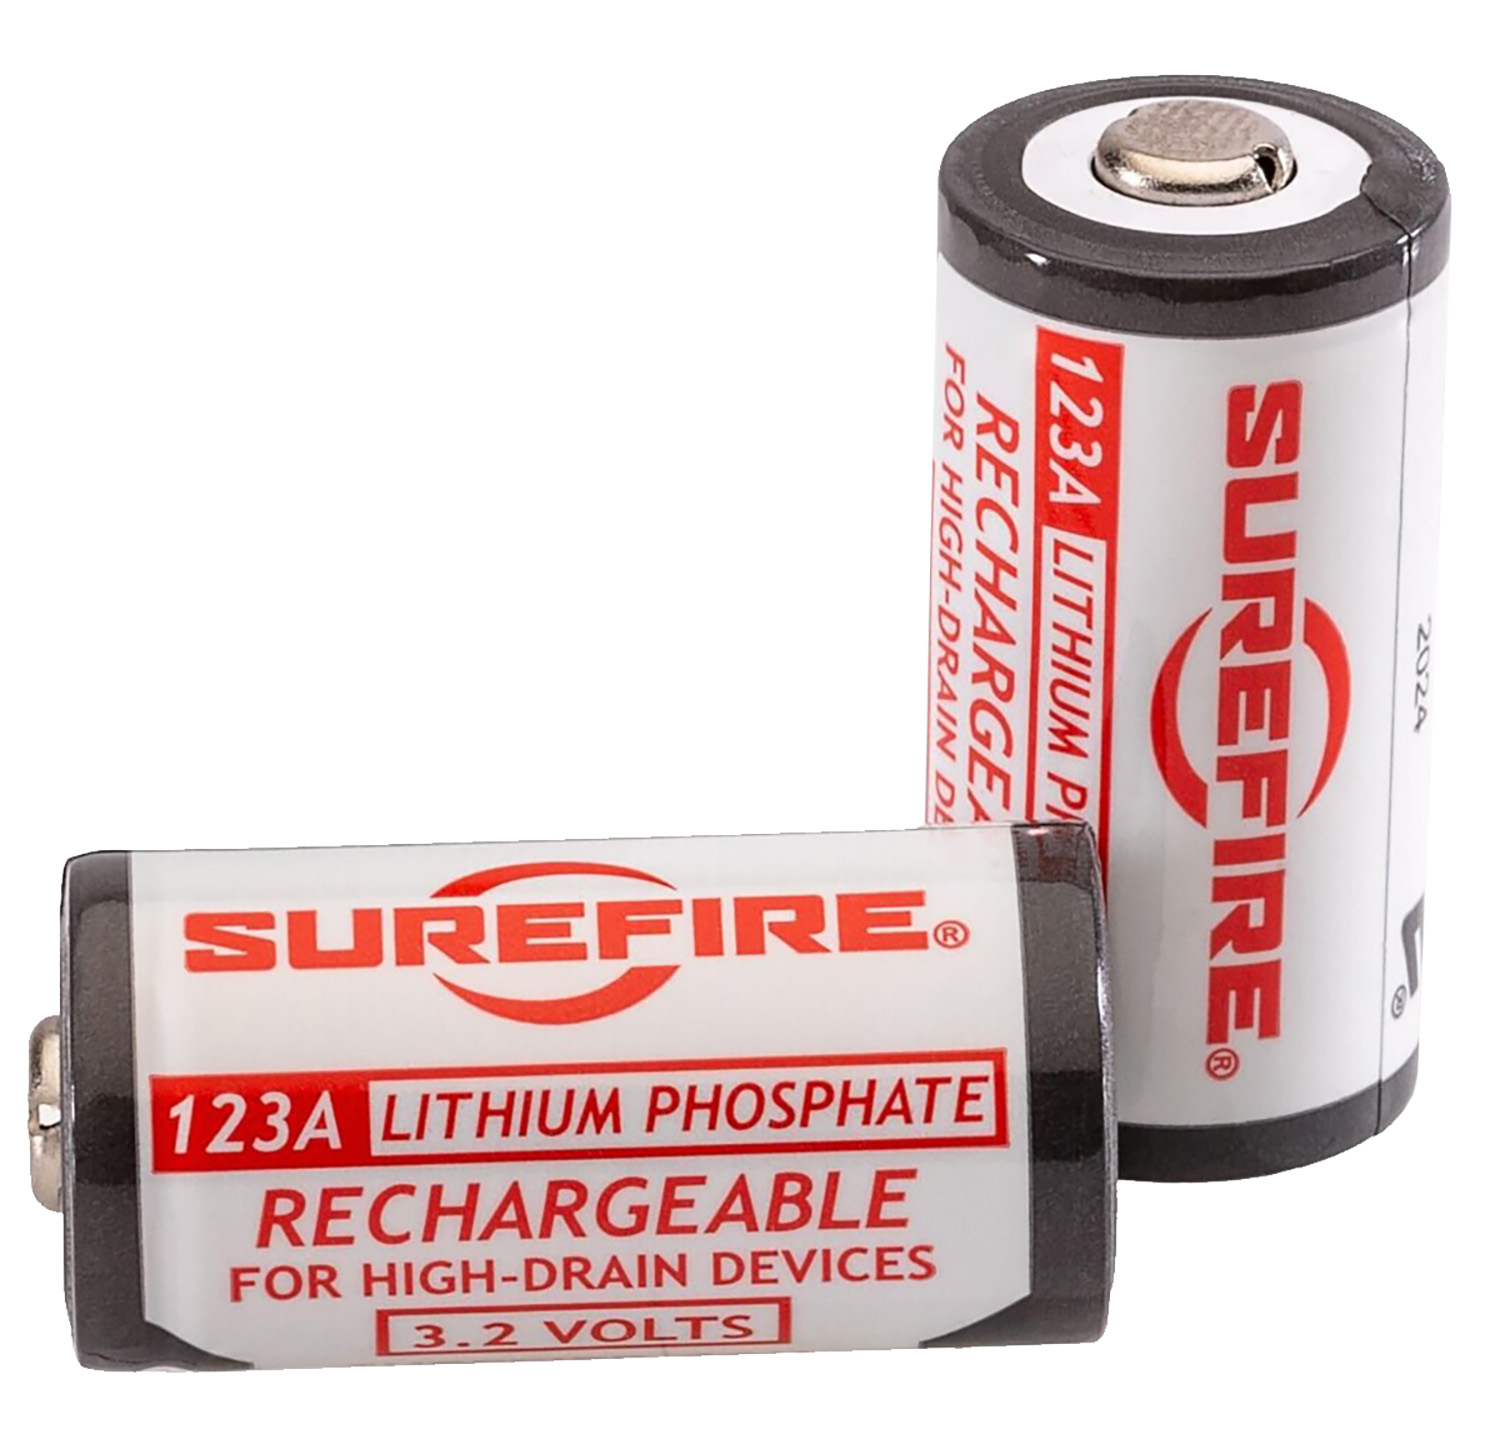 SureFire SFLFP123 CR123A Rechargeable 3V Li-Ion 1550 mAh 2 Pack